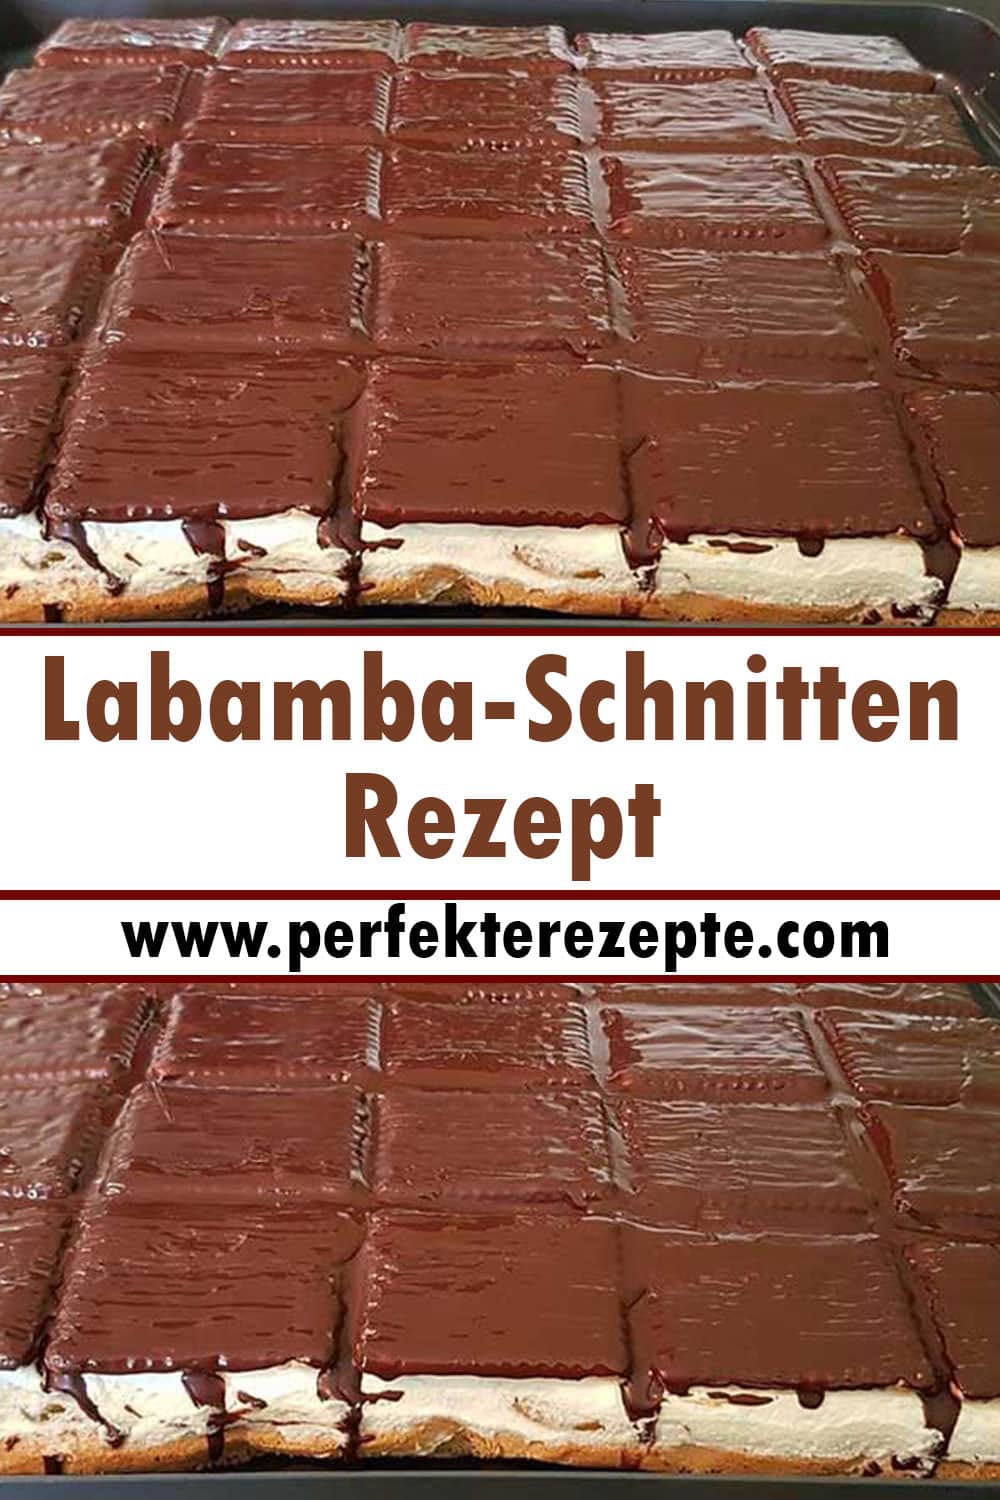 Labamba-Schnitten Rezept